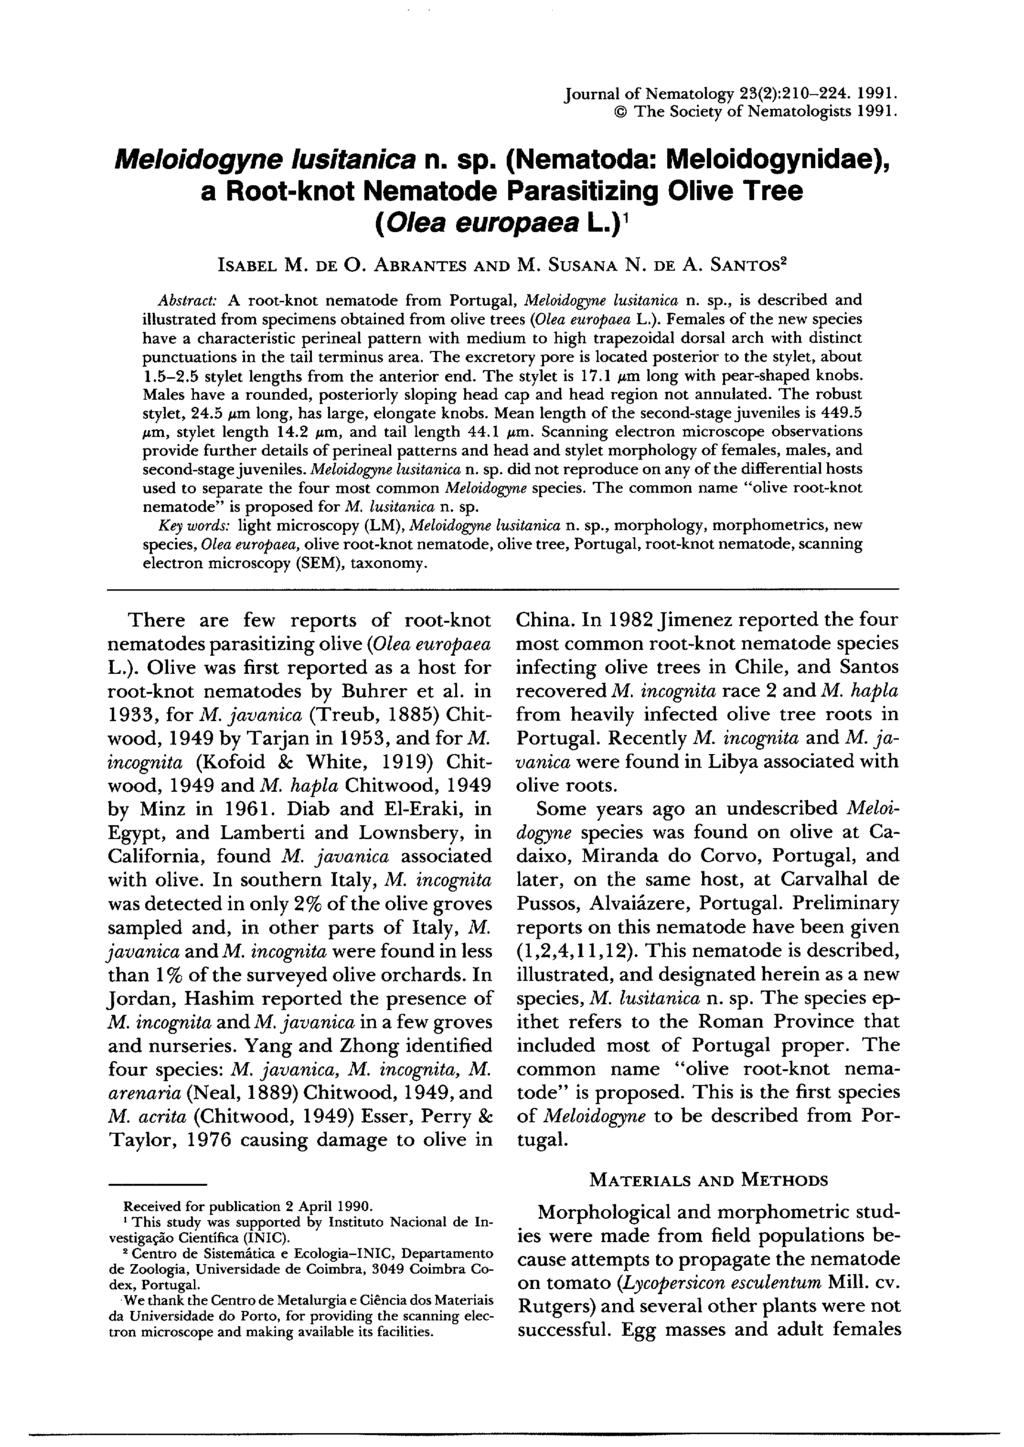 Journal of Nematology 23(2):210-224. 1991. The Society of Nematologists 1991. Meloidogyne lusitanica n. sp. (Nematoda: Meloidogynidae), a Root-knot Nematode Parasitizing Olive Tree ( Olea europaea L.